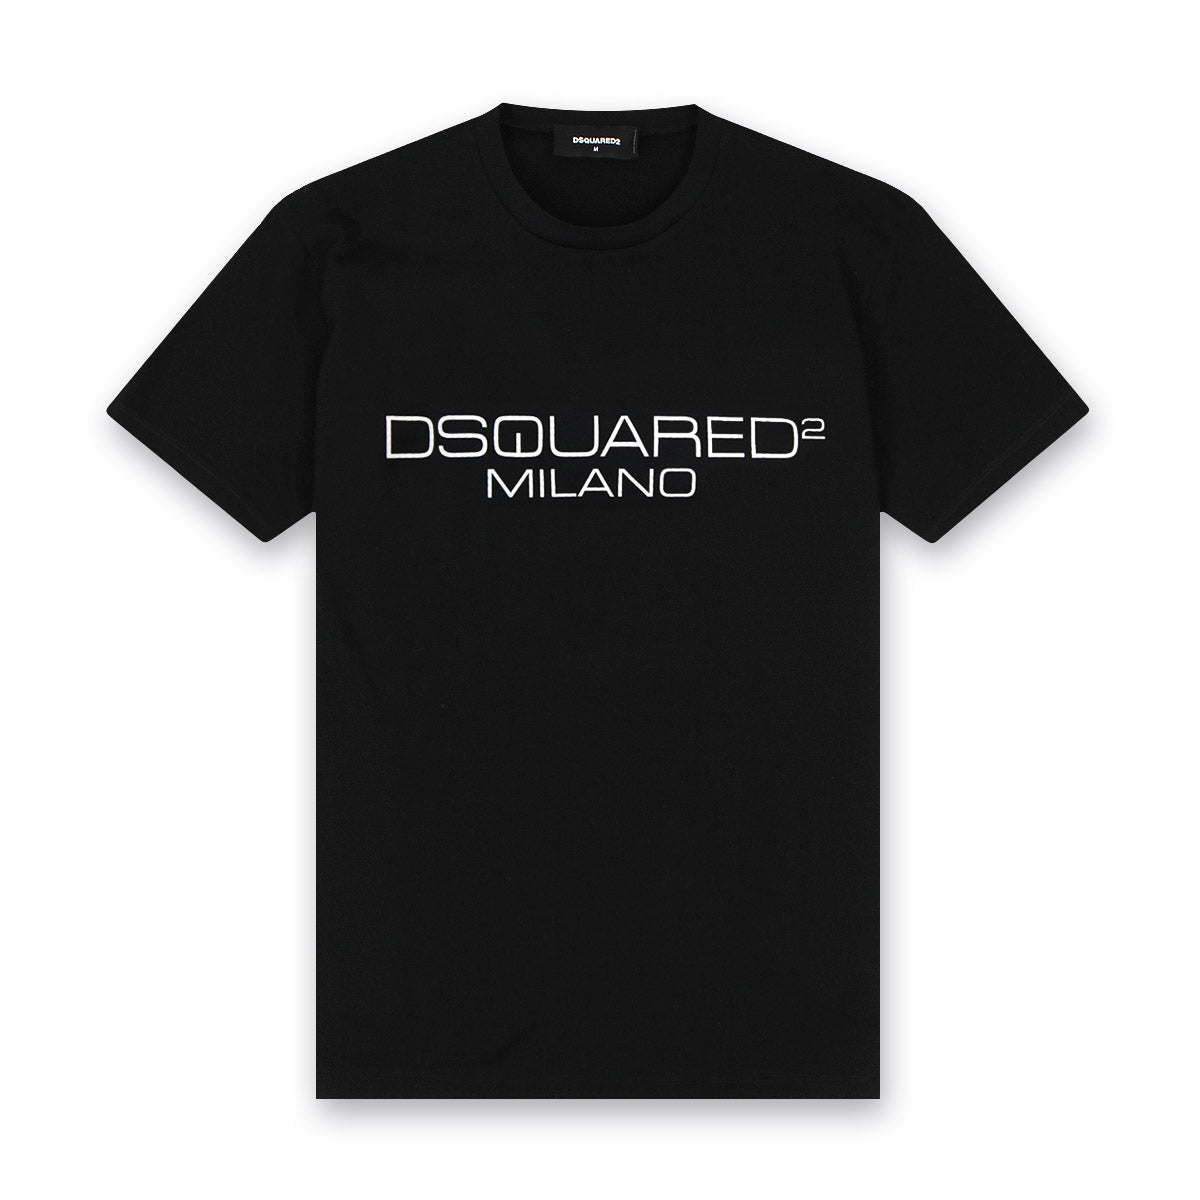 DSQUARED2 - Milano T-Shirt in Black